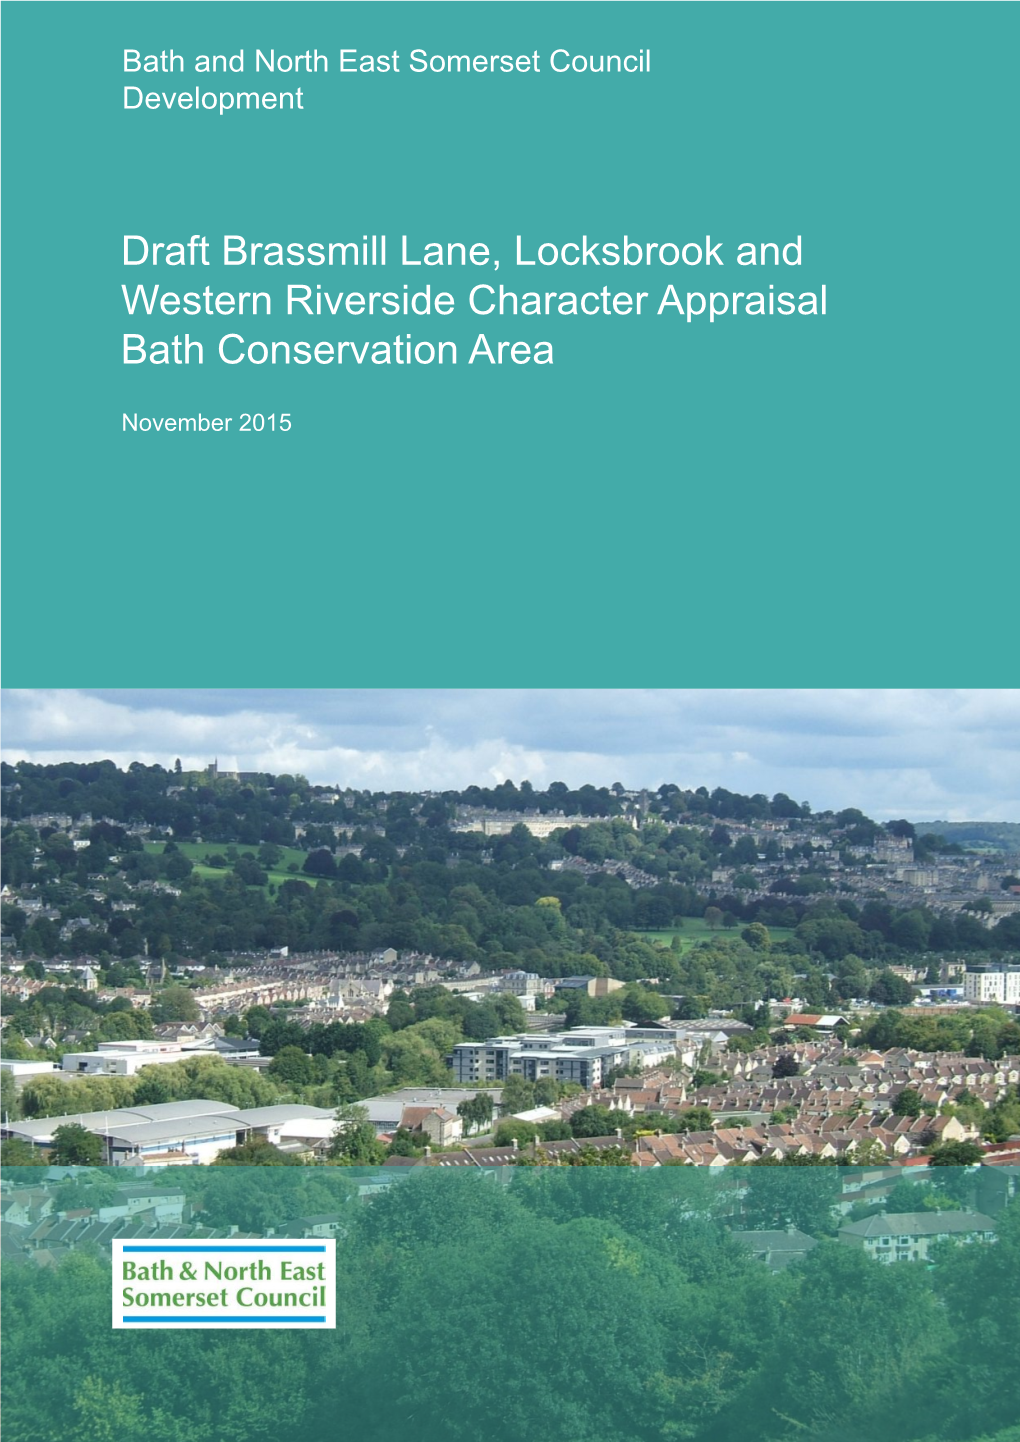 Draft Brassmill Lane, Locksbrook and Western Riverside Character Appraisal Bath Conservation Area